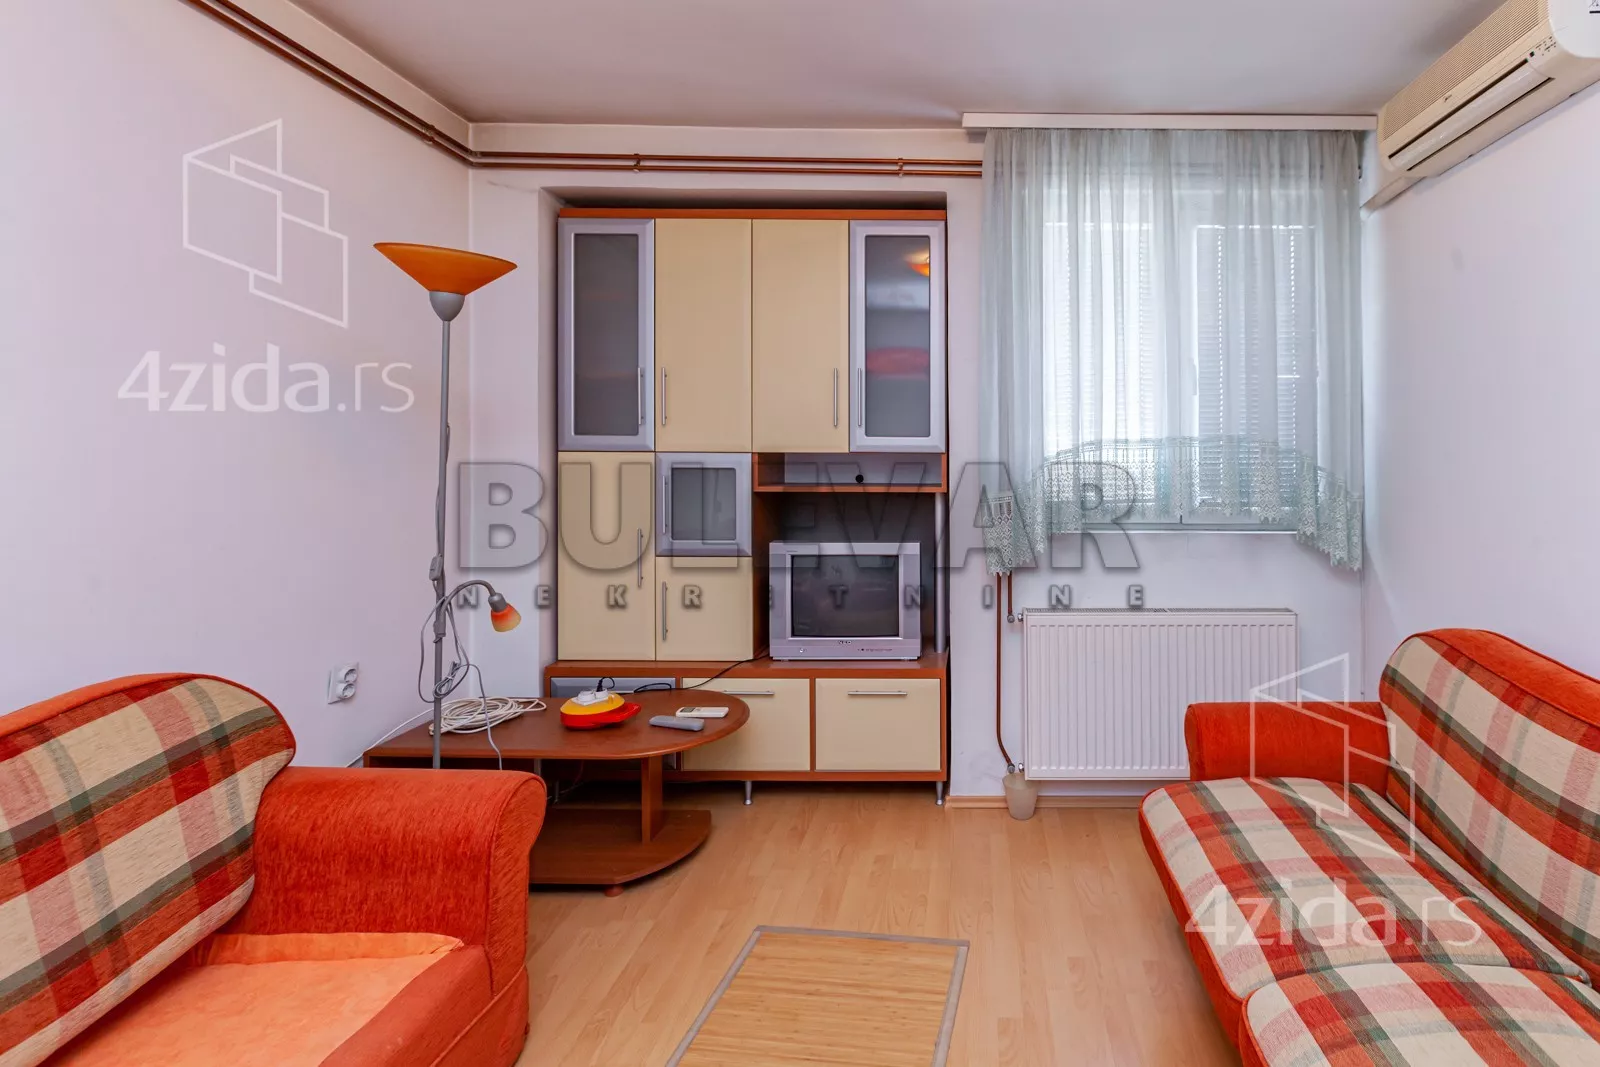 Dvosoban stan na prodaju, Bulevar dr Zorana, 83.000€, 50m² - 4zida